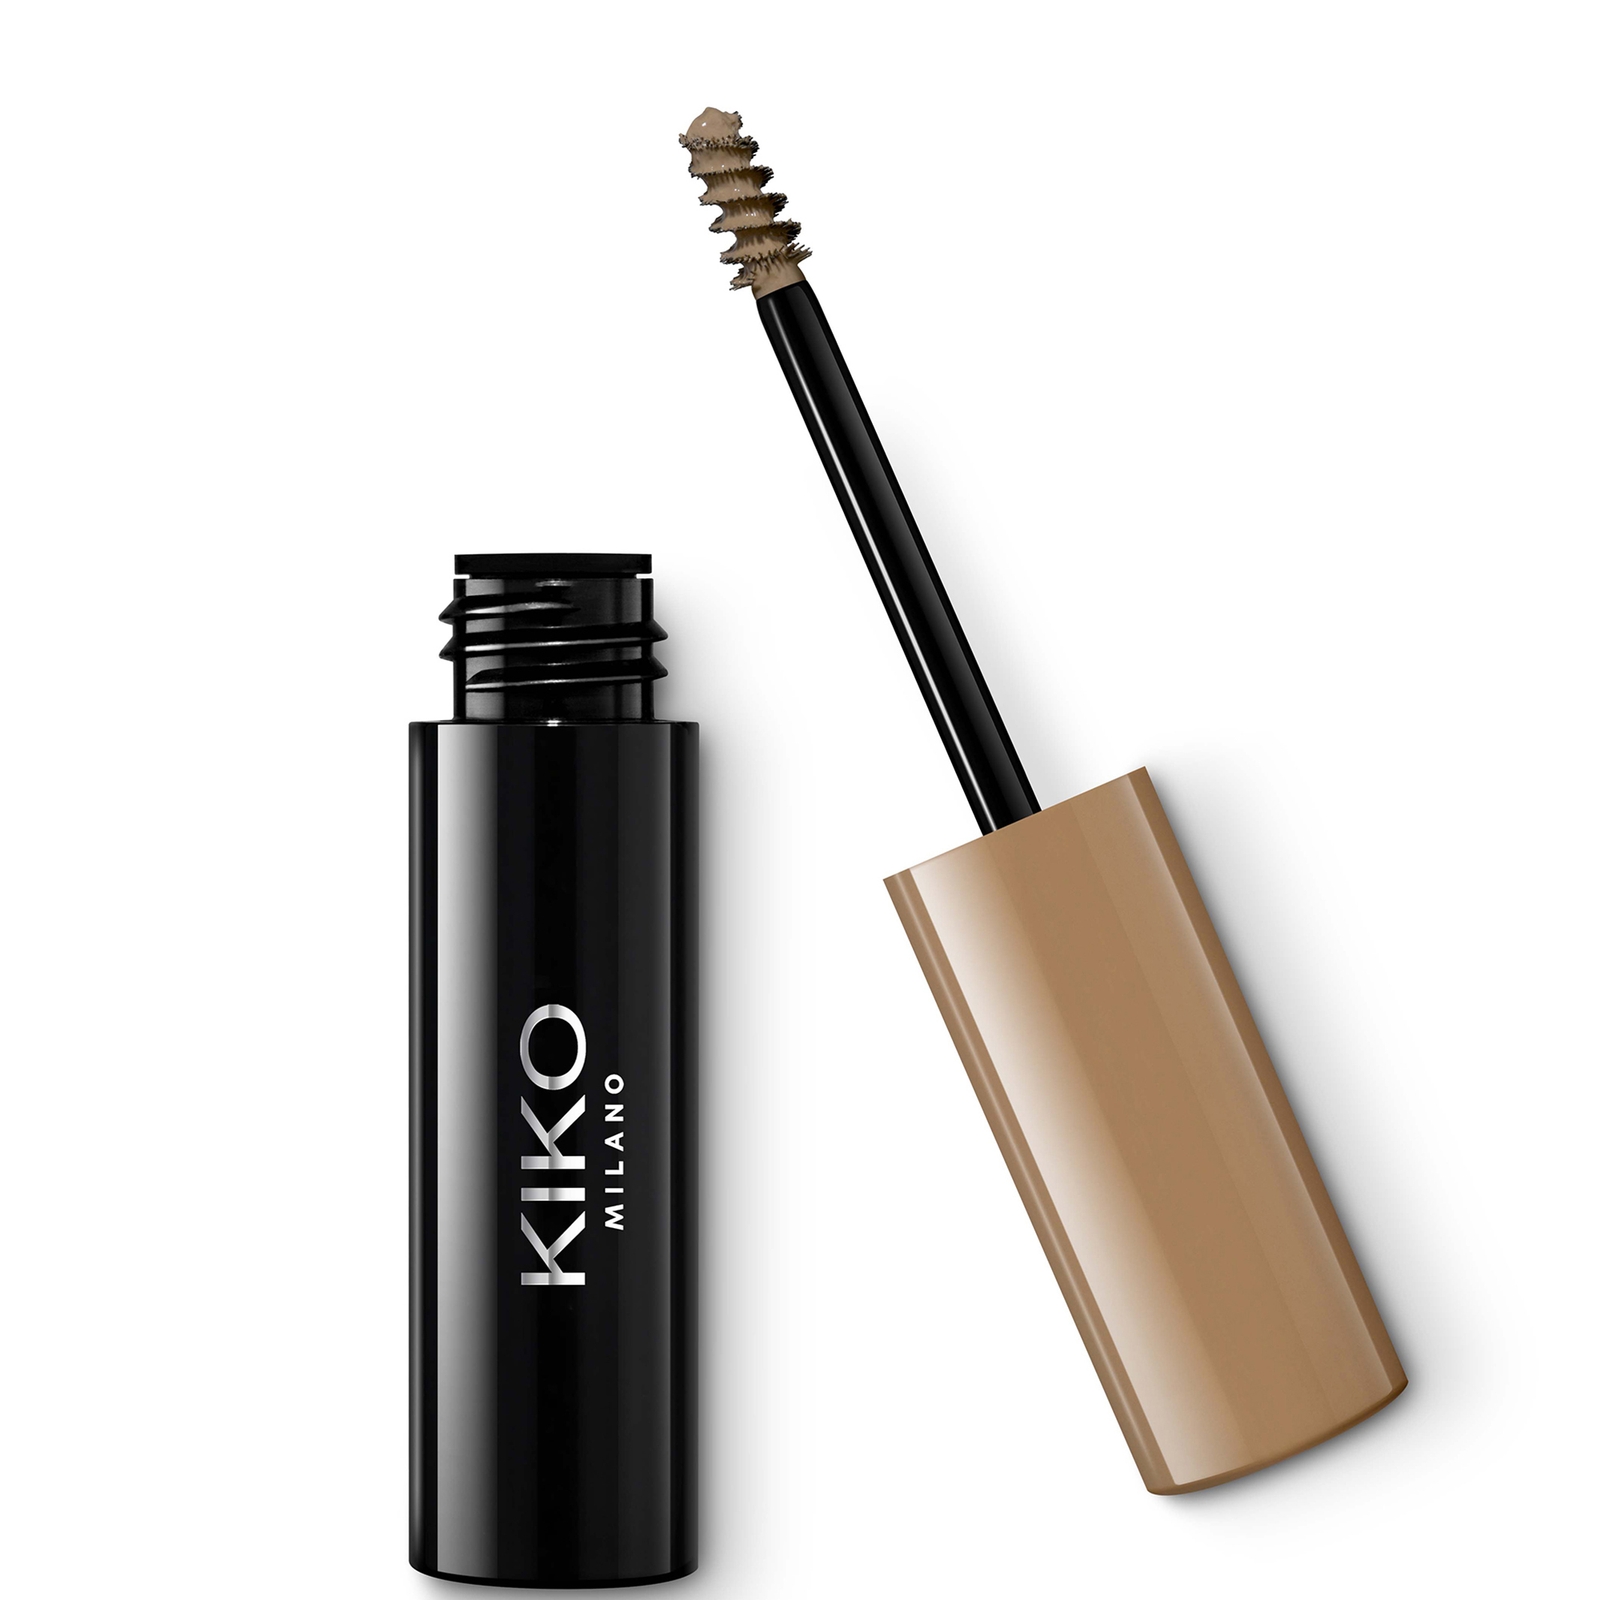 Image of KIKO Milano Eyebrow Fibers Coloured Mascara 4.2ml (Various Shades) - 02 Fair